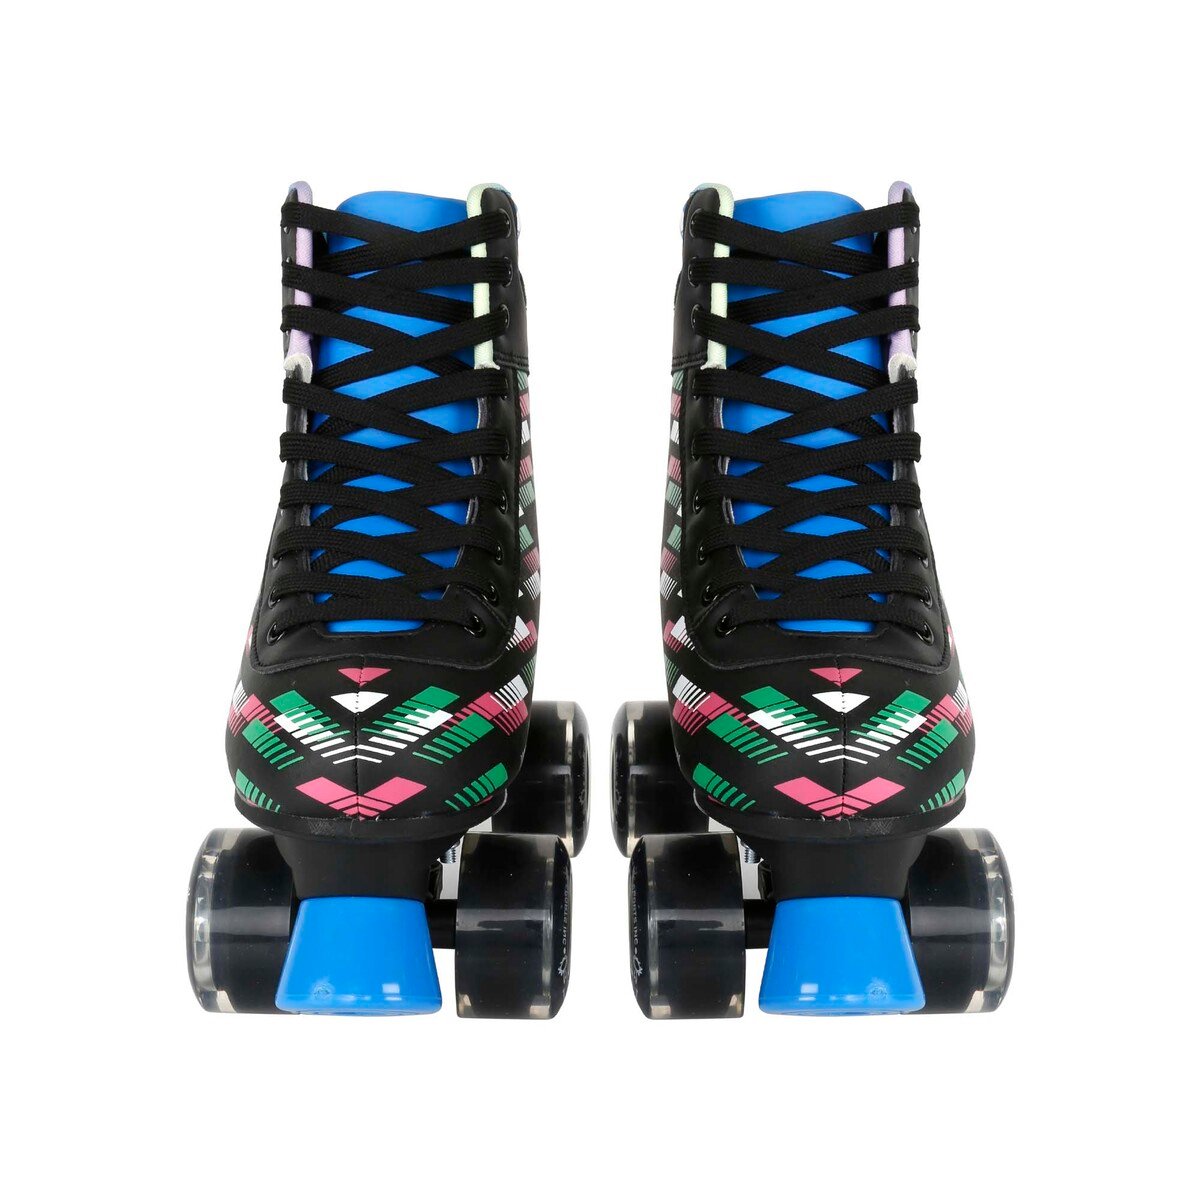 Sports Inc Skating Shoe, LED TEQR004, Assorted Colors, Medium